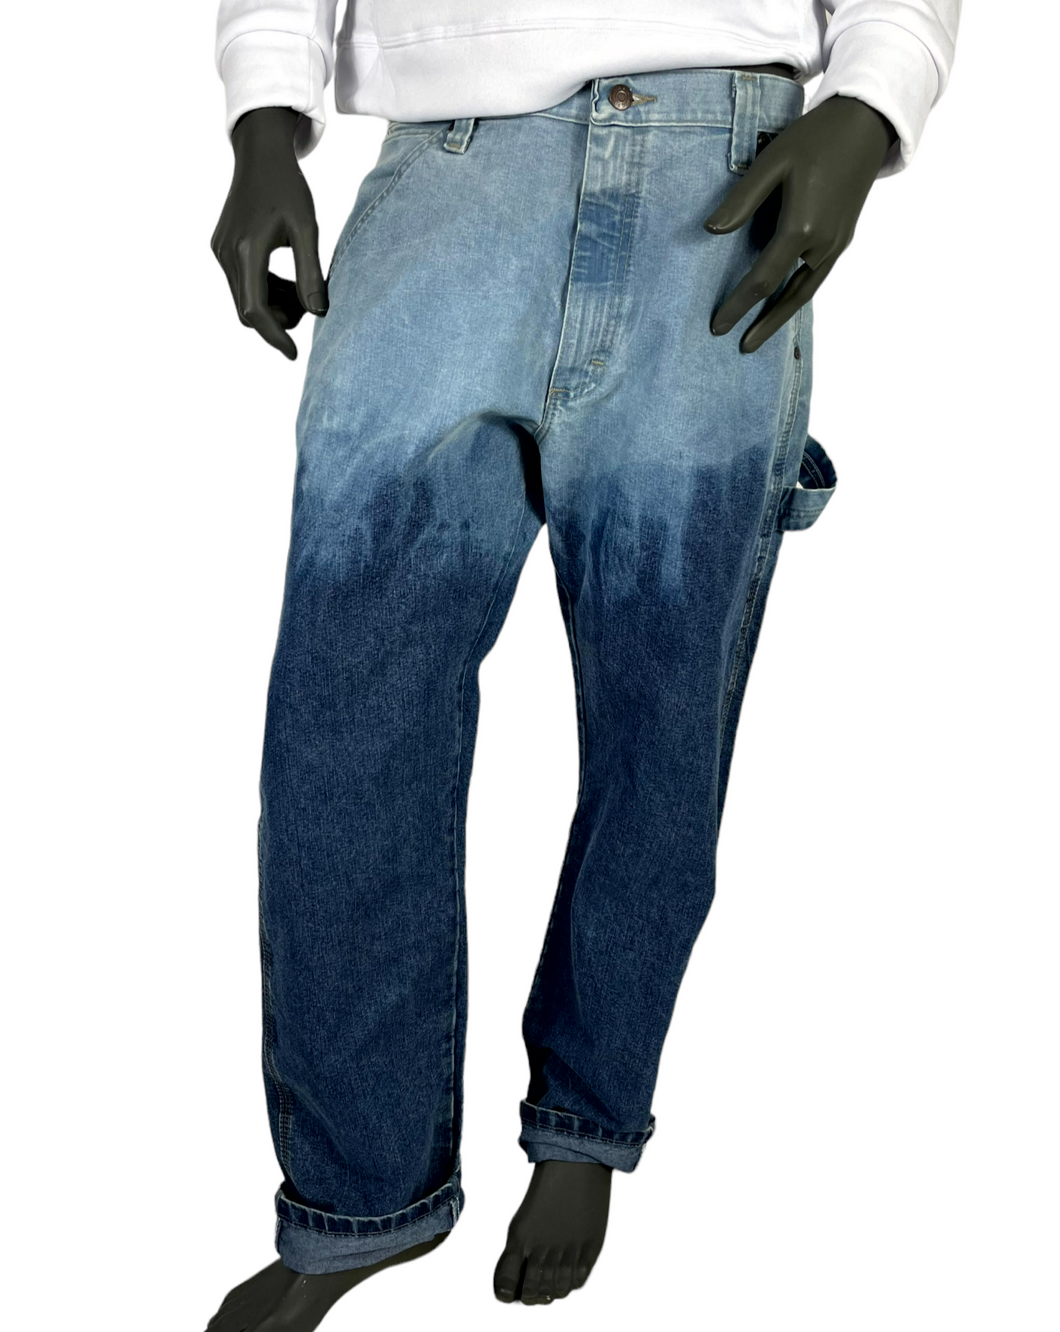 Mens Bleach Dye Jeans - 34x 32